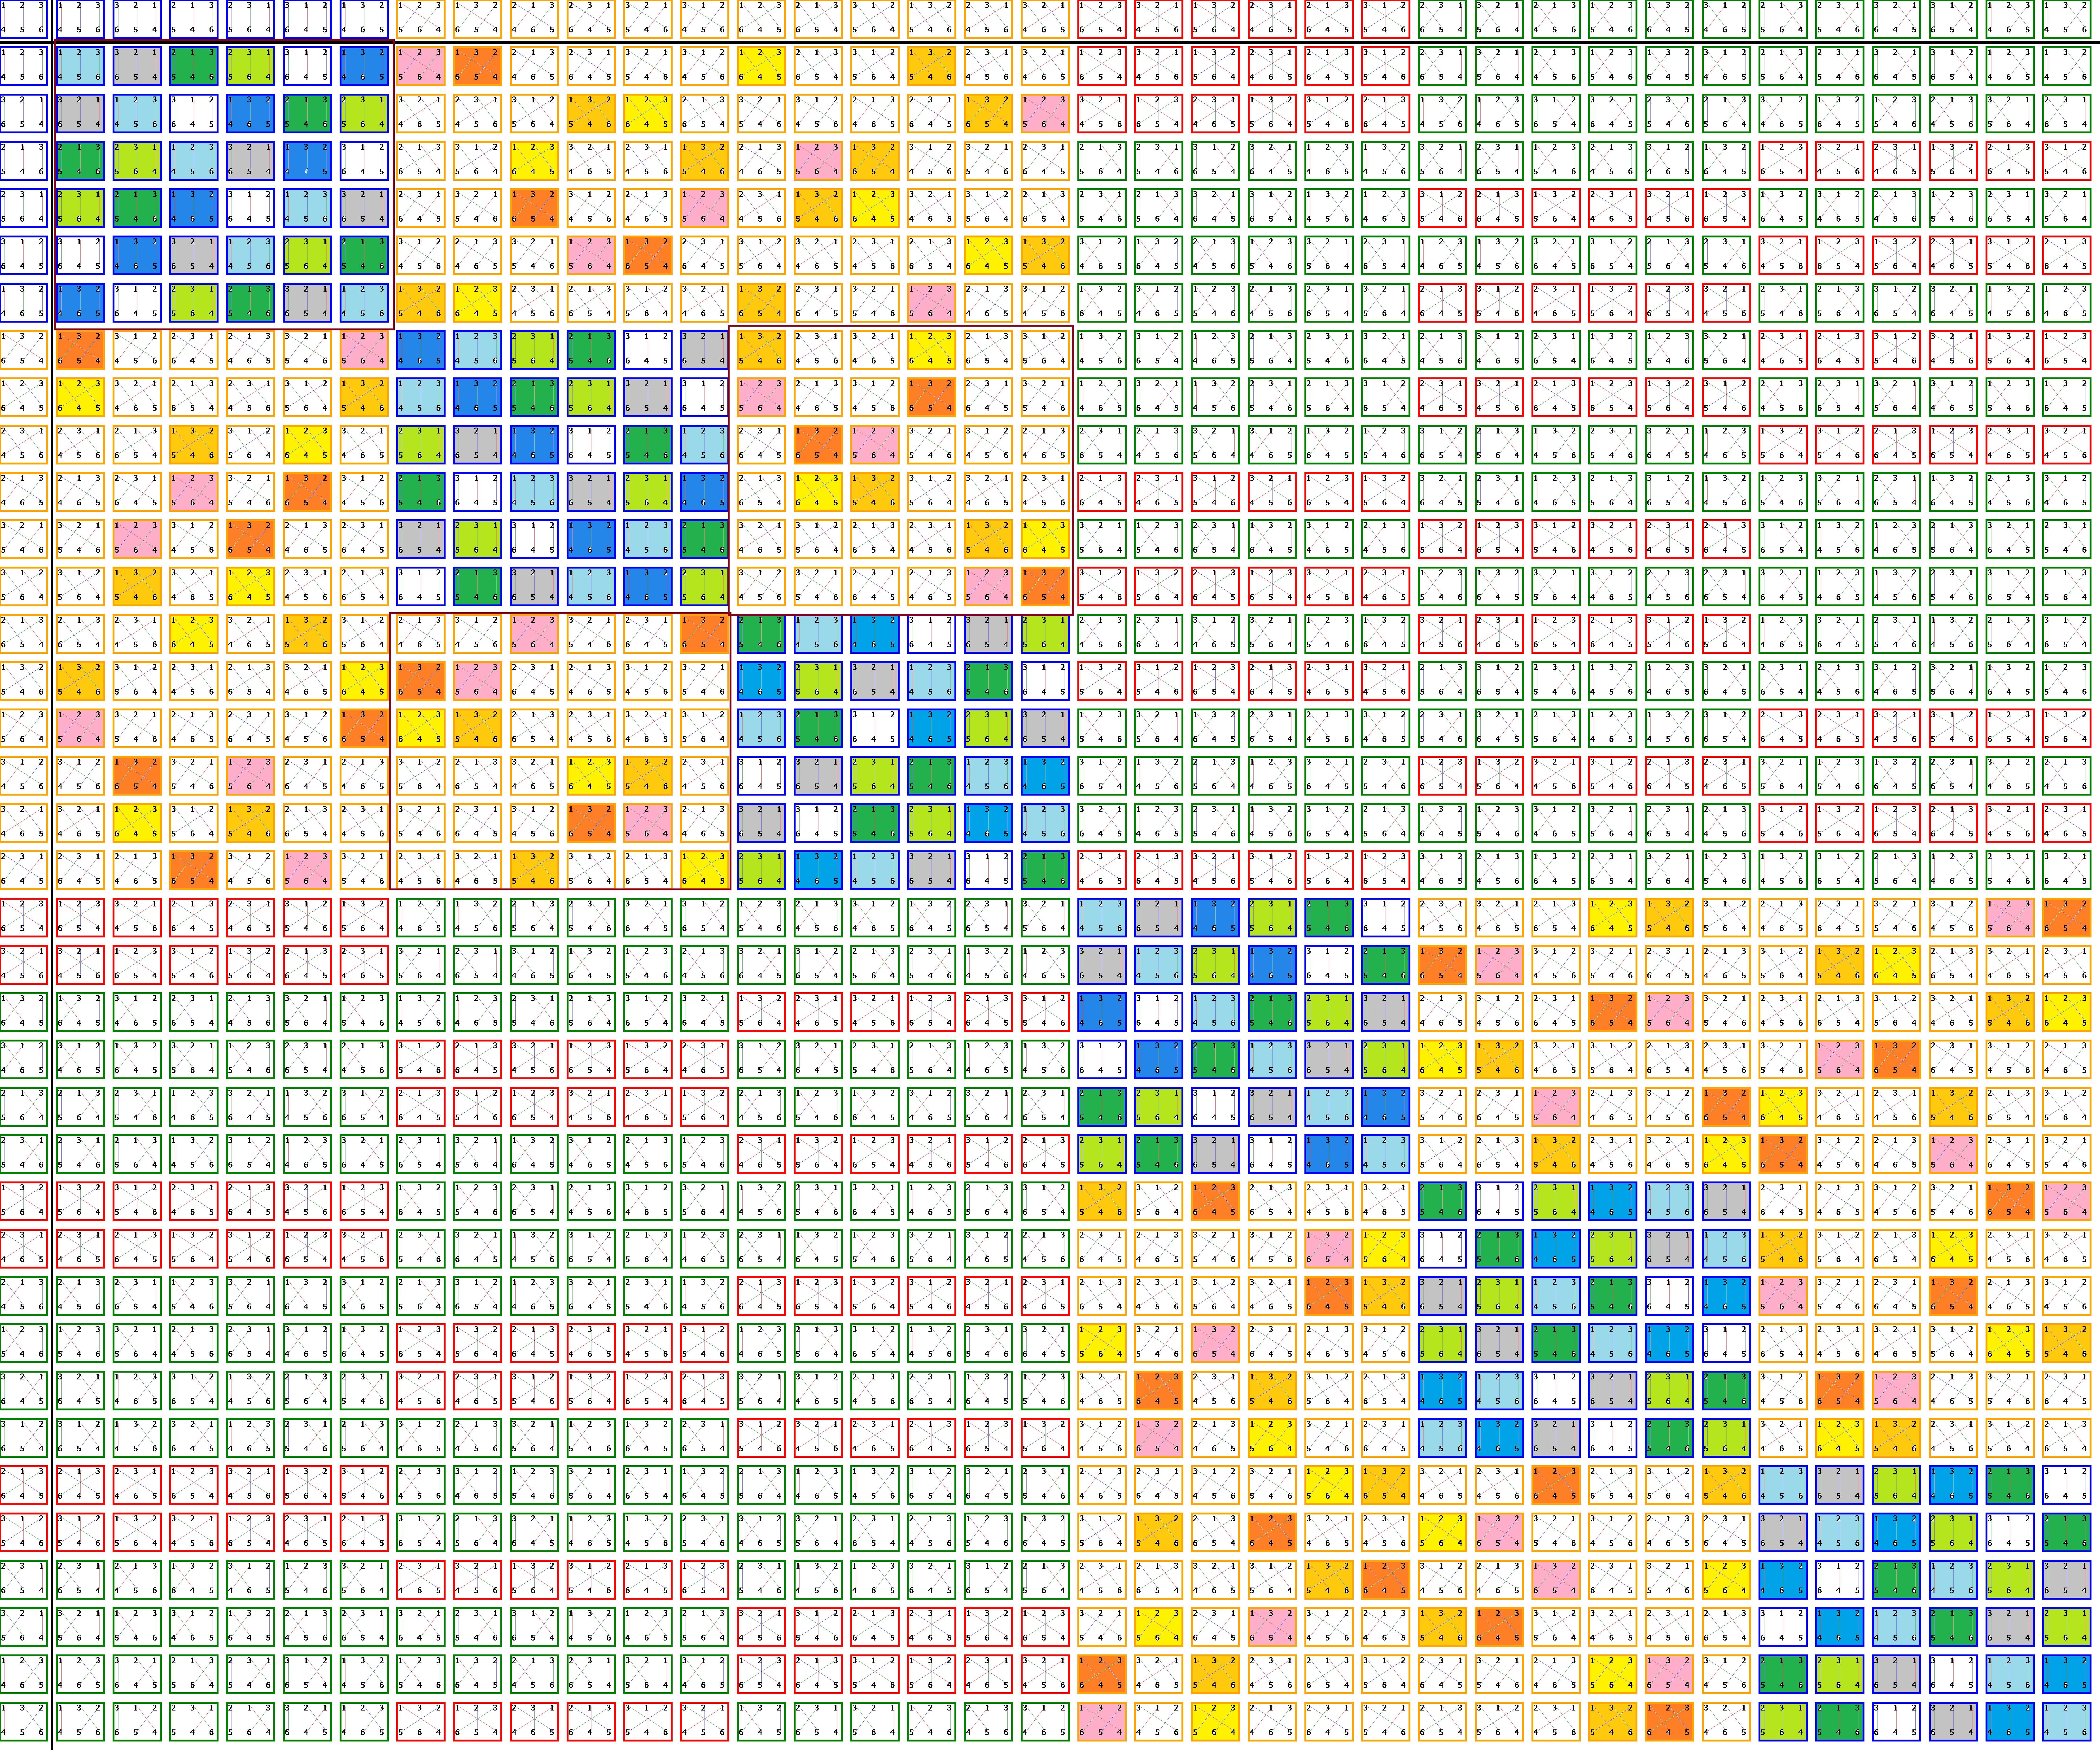 Tabel Albastru Galben. 123 stânga sus - dreapta jos, bleu mov. Simetrii complexe.